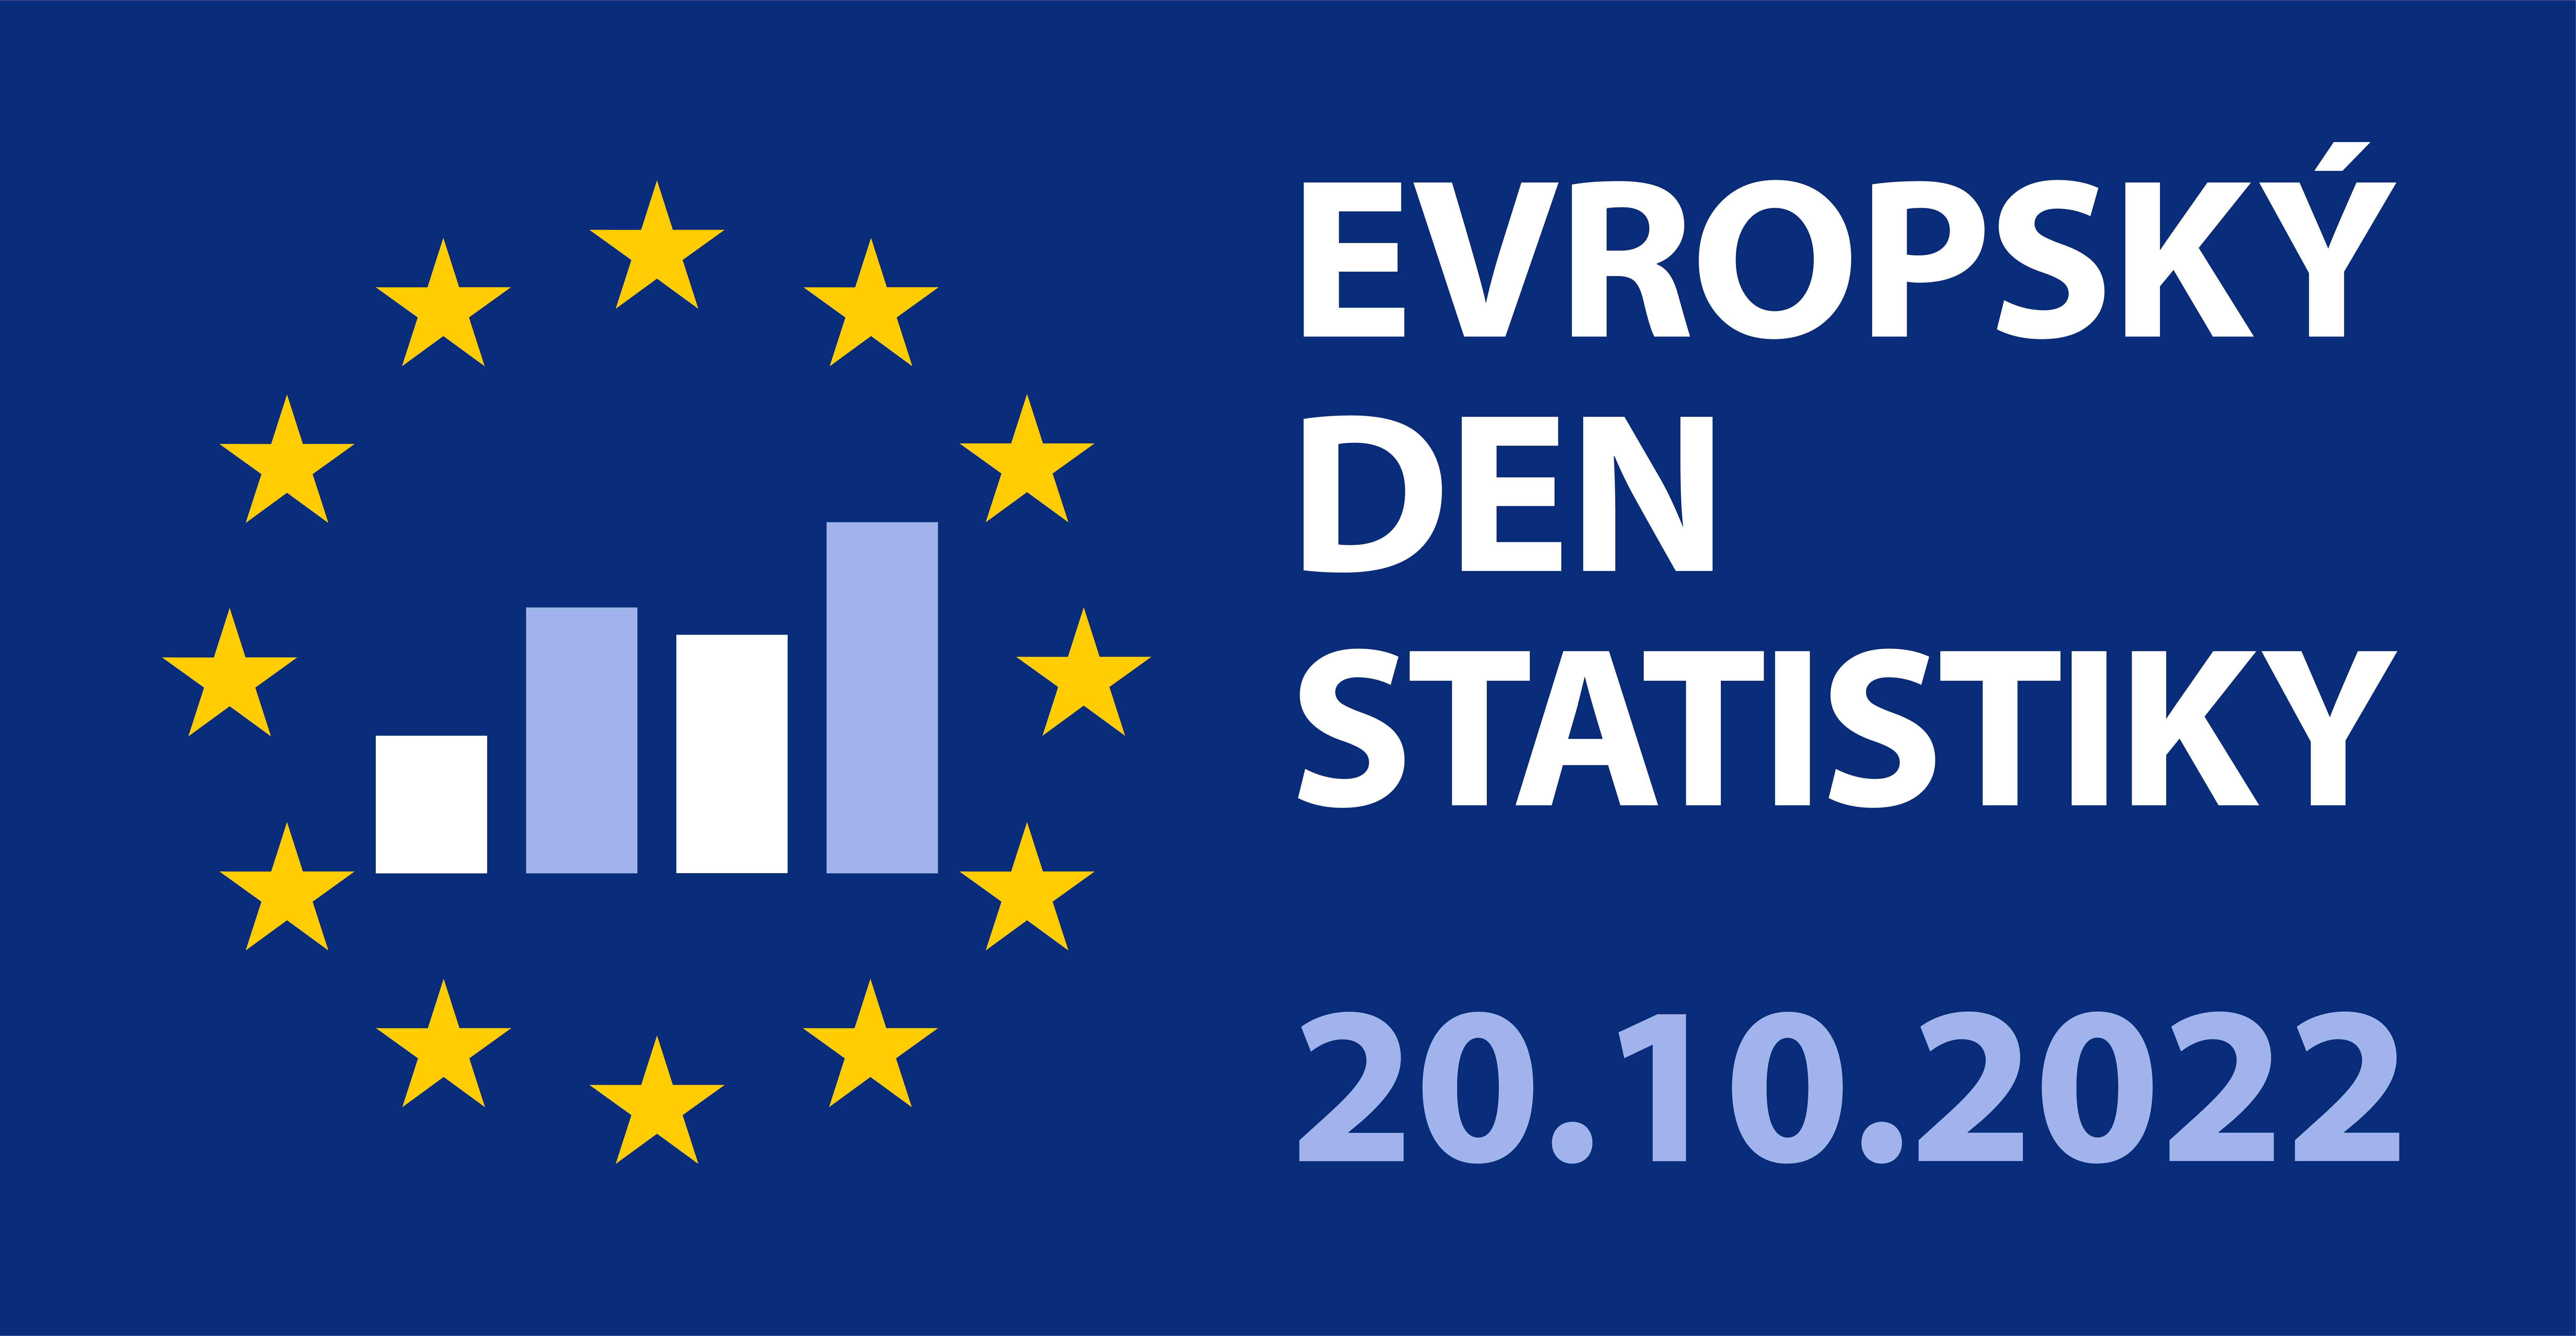 Evropský den statistiky 2022